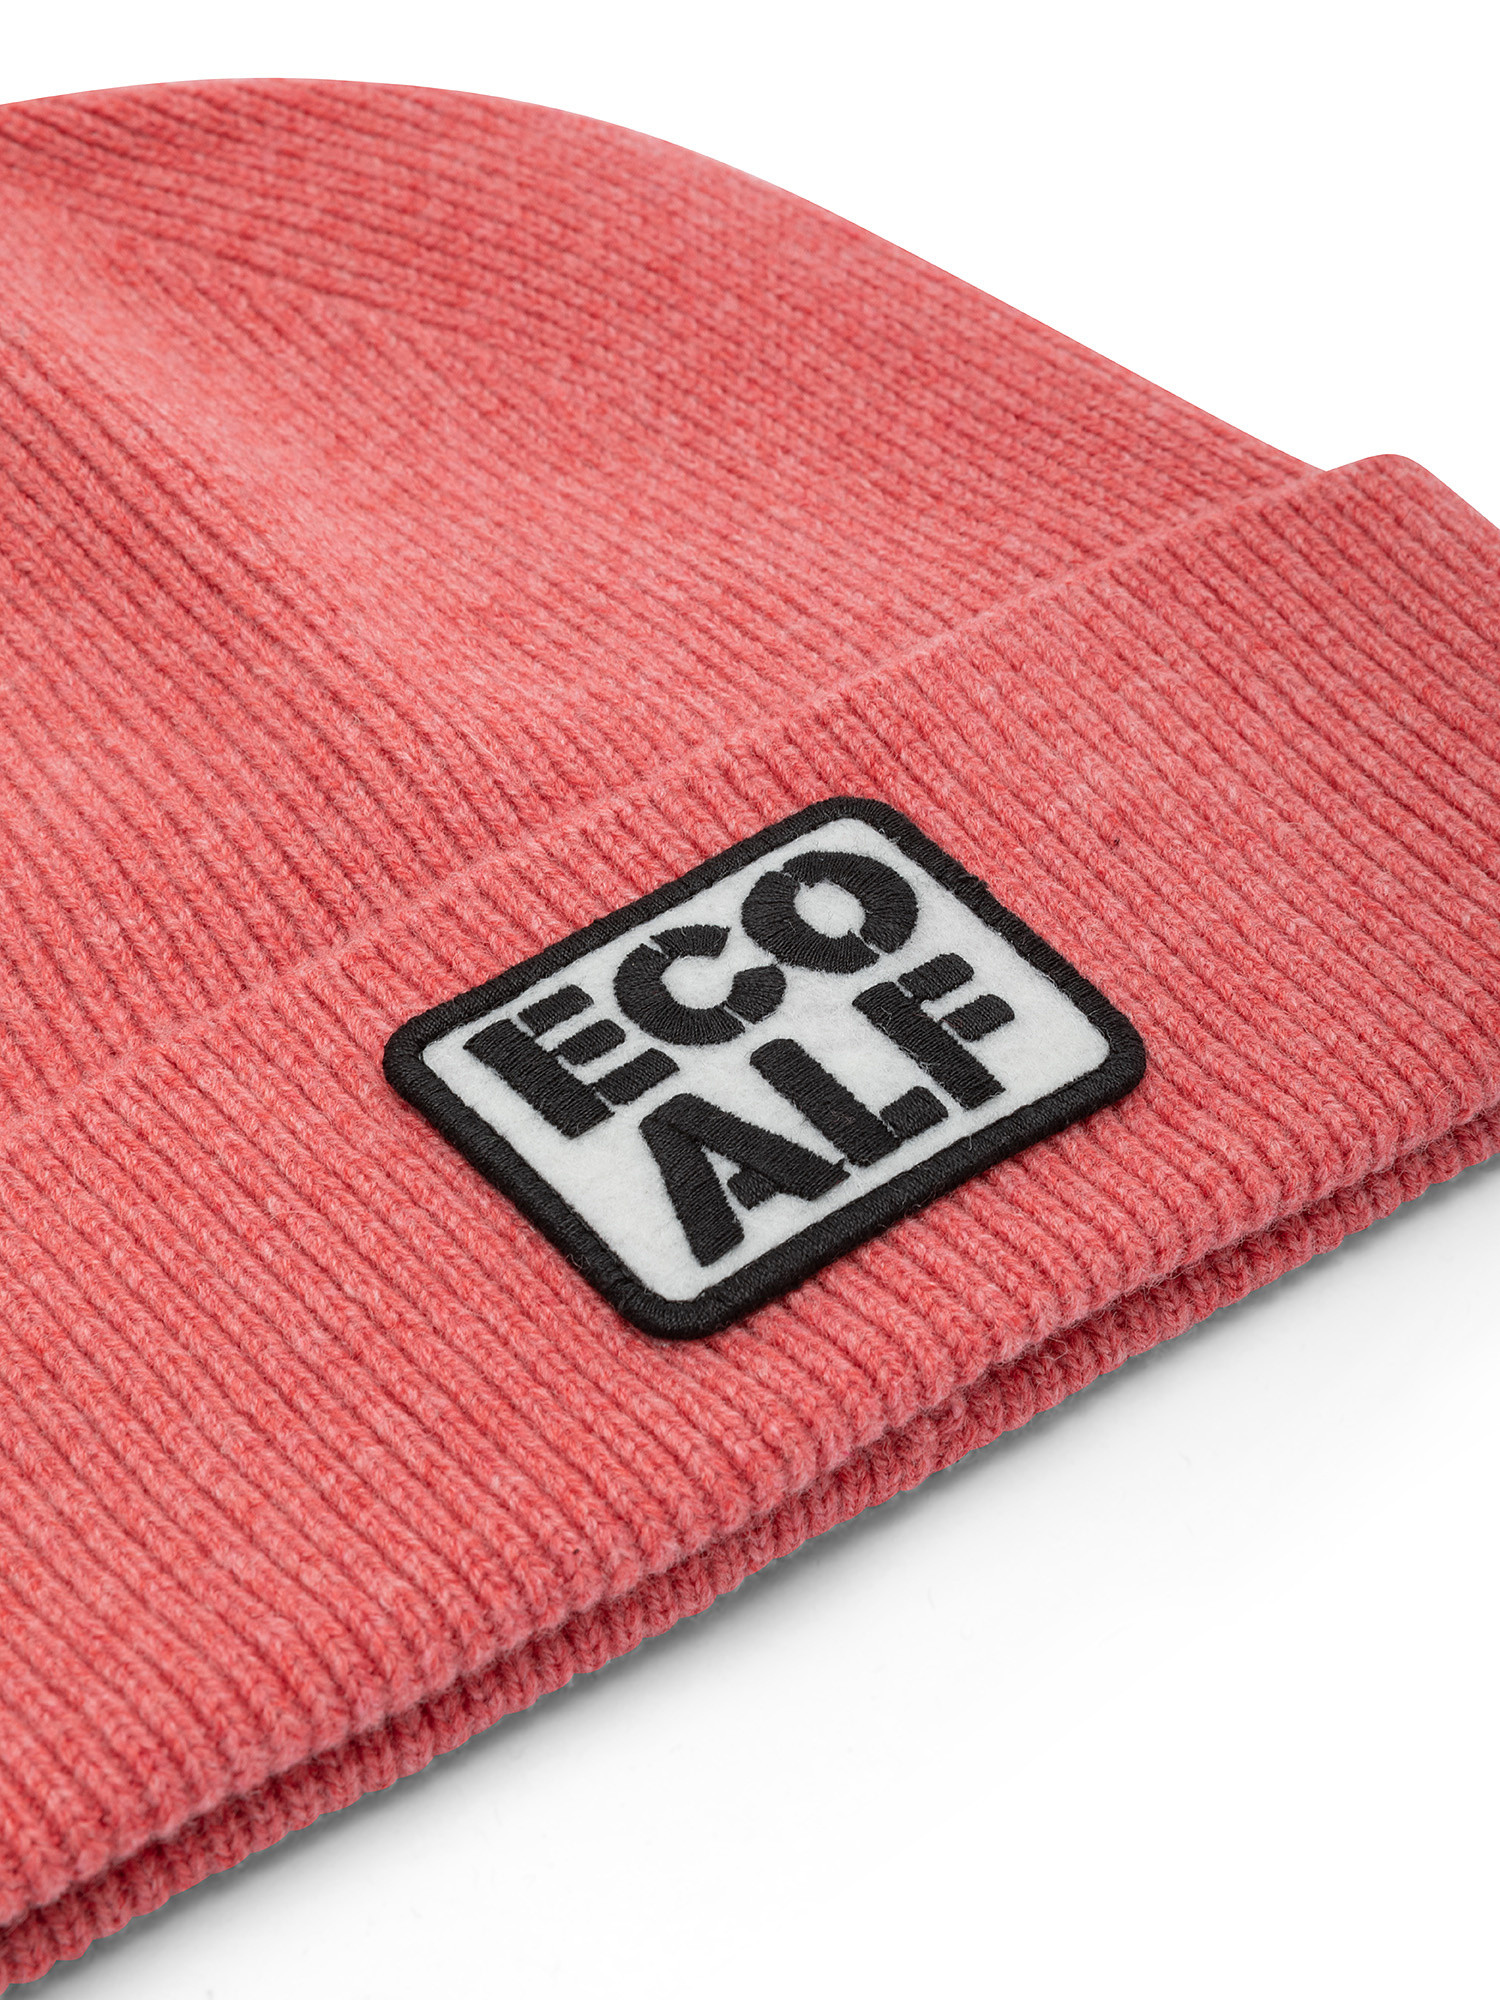 Ecoalf - Cappello con logo, Rosa scuro, large image number 1